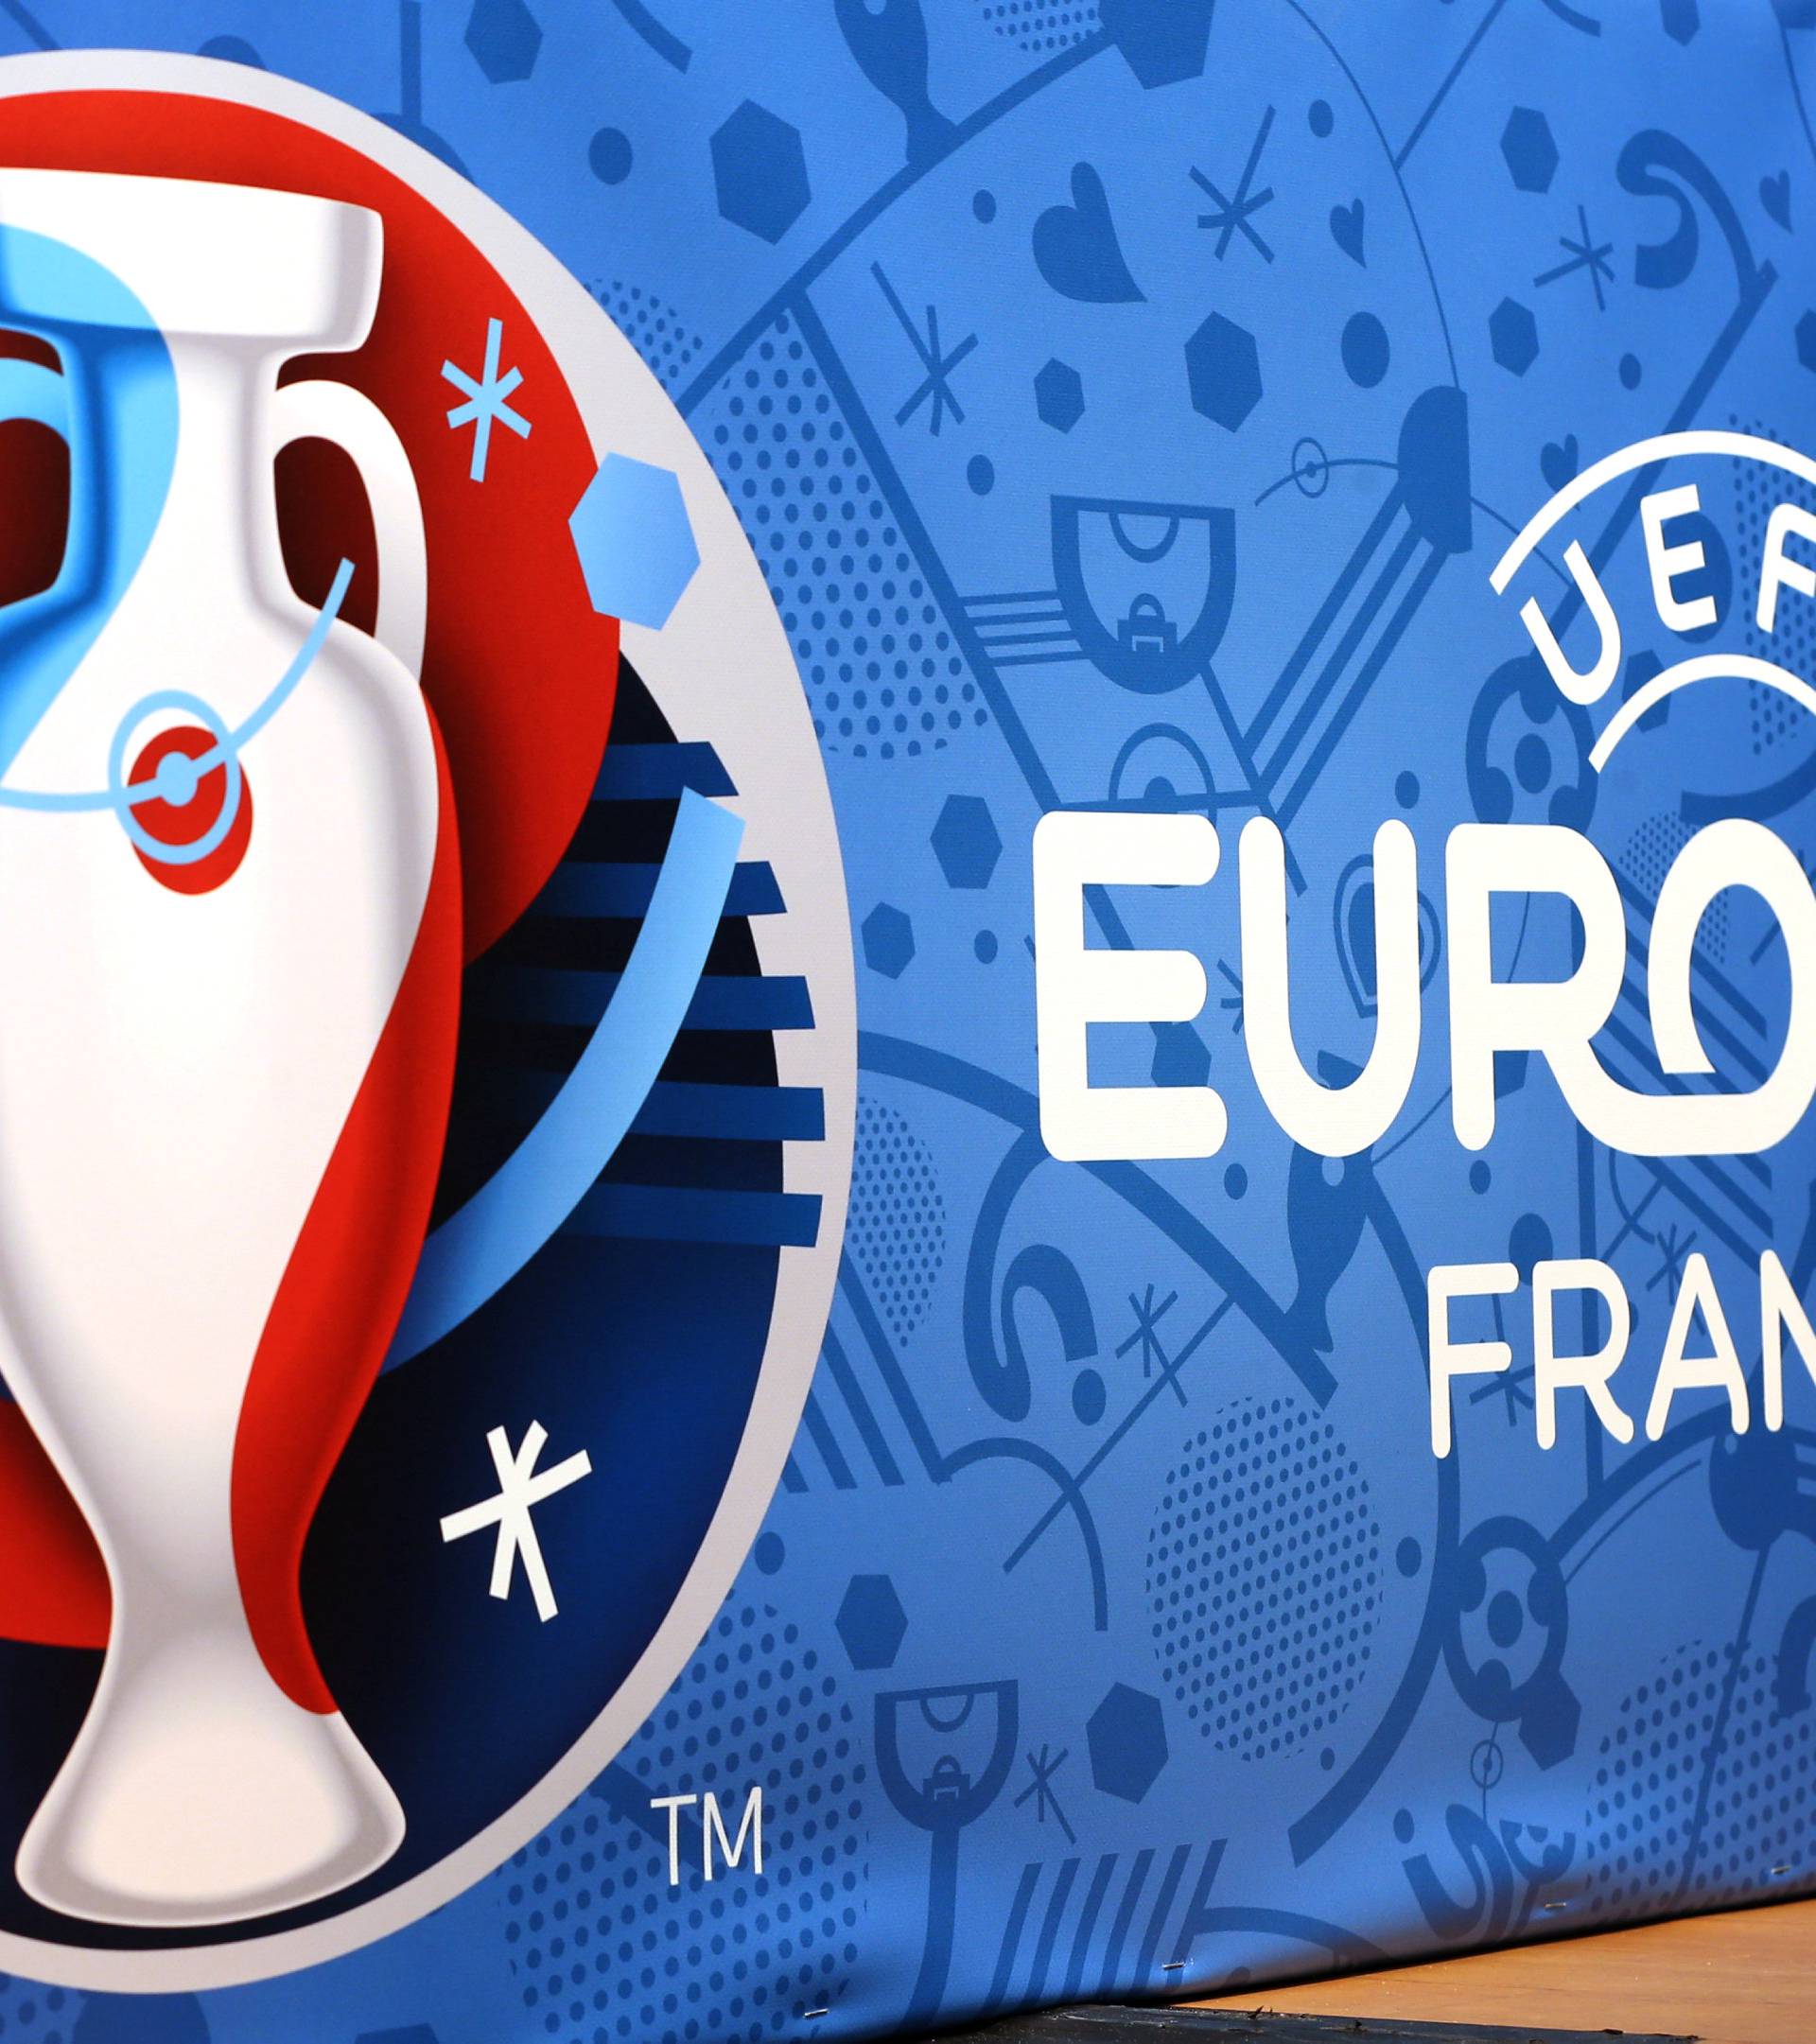 Football Soccer - UEFA Euro 2016 soccer tournament